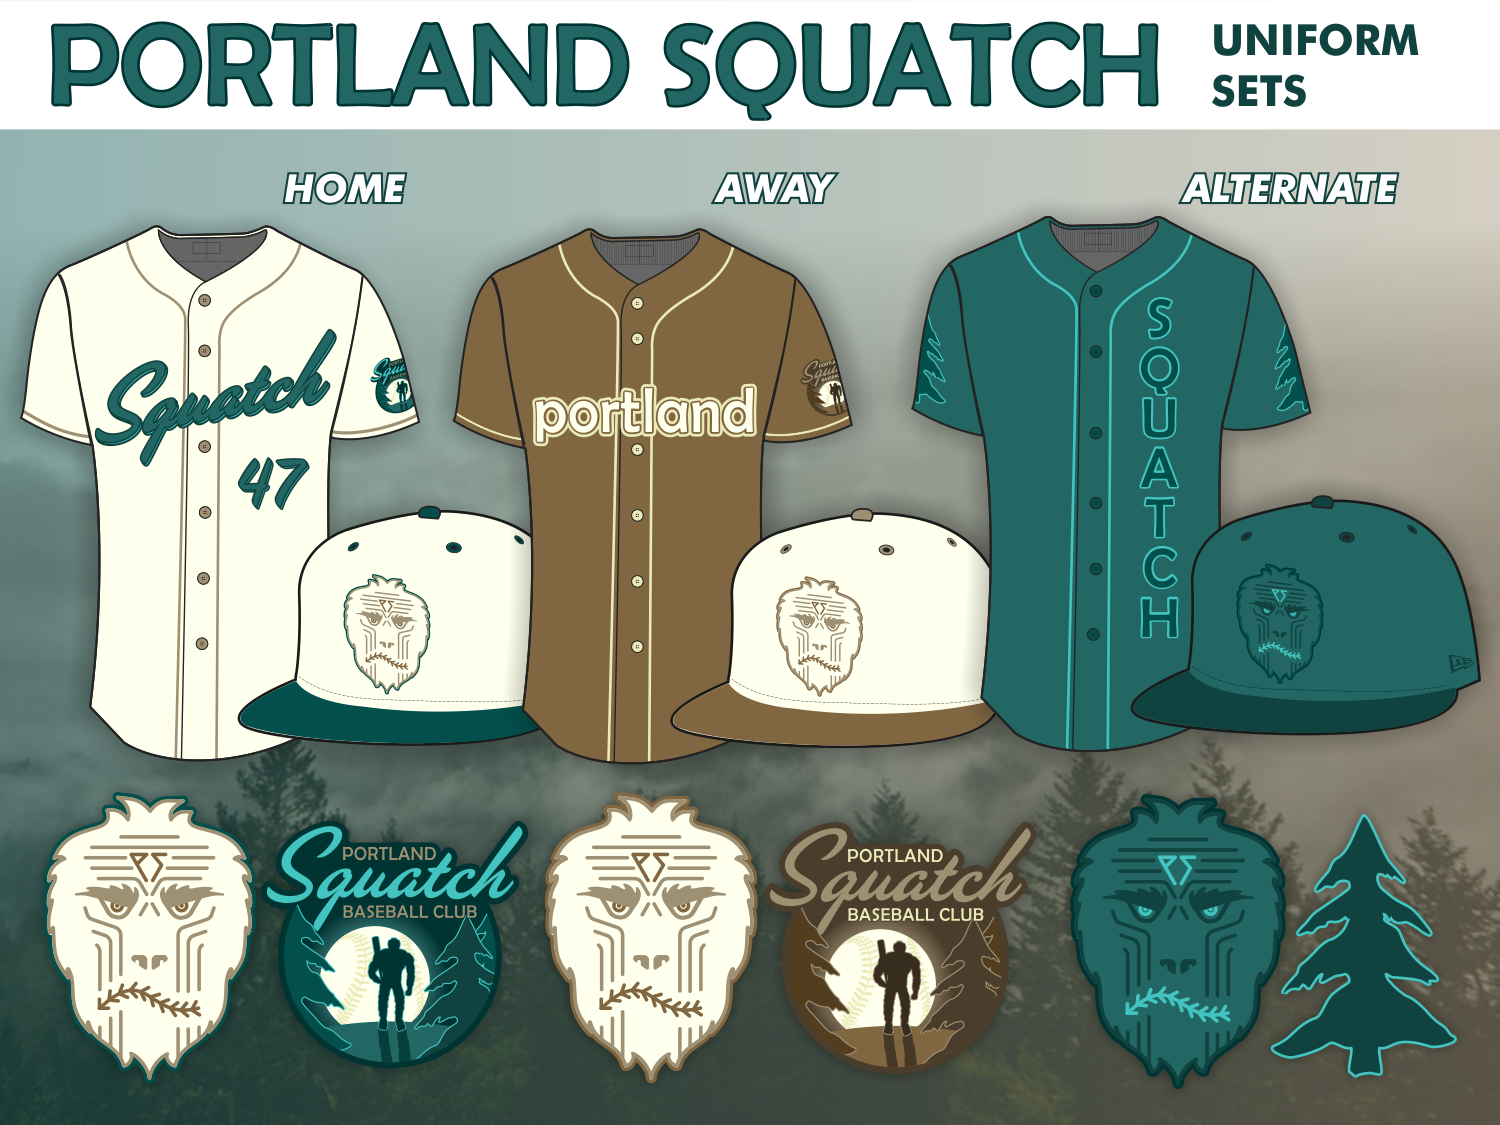 Portland Squatch Baseball Club: Uniform Sets by Luke Hooper on Dribbble